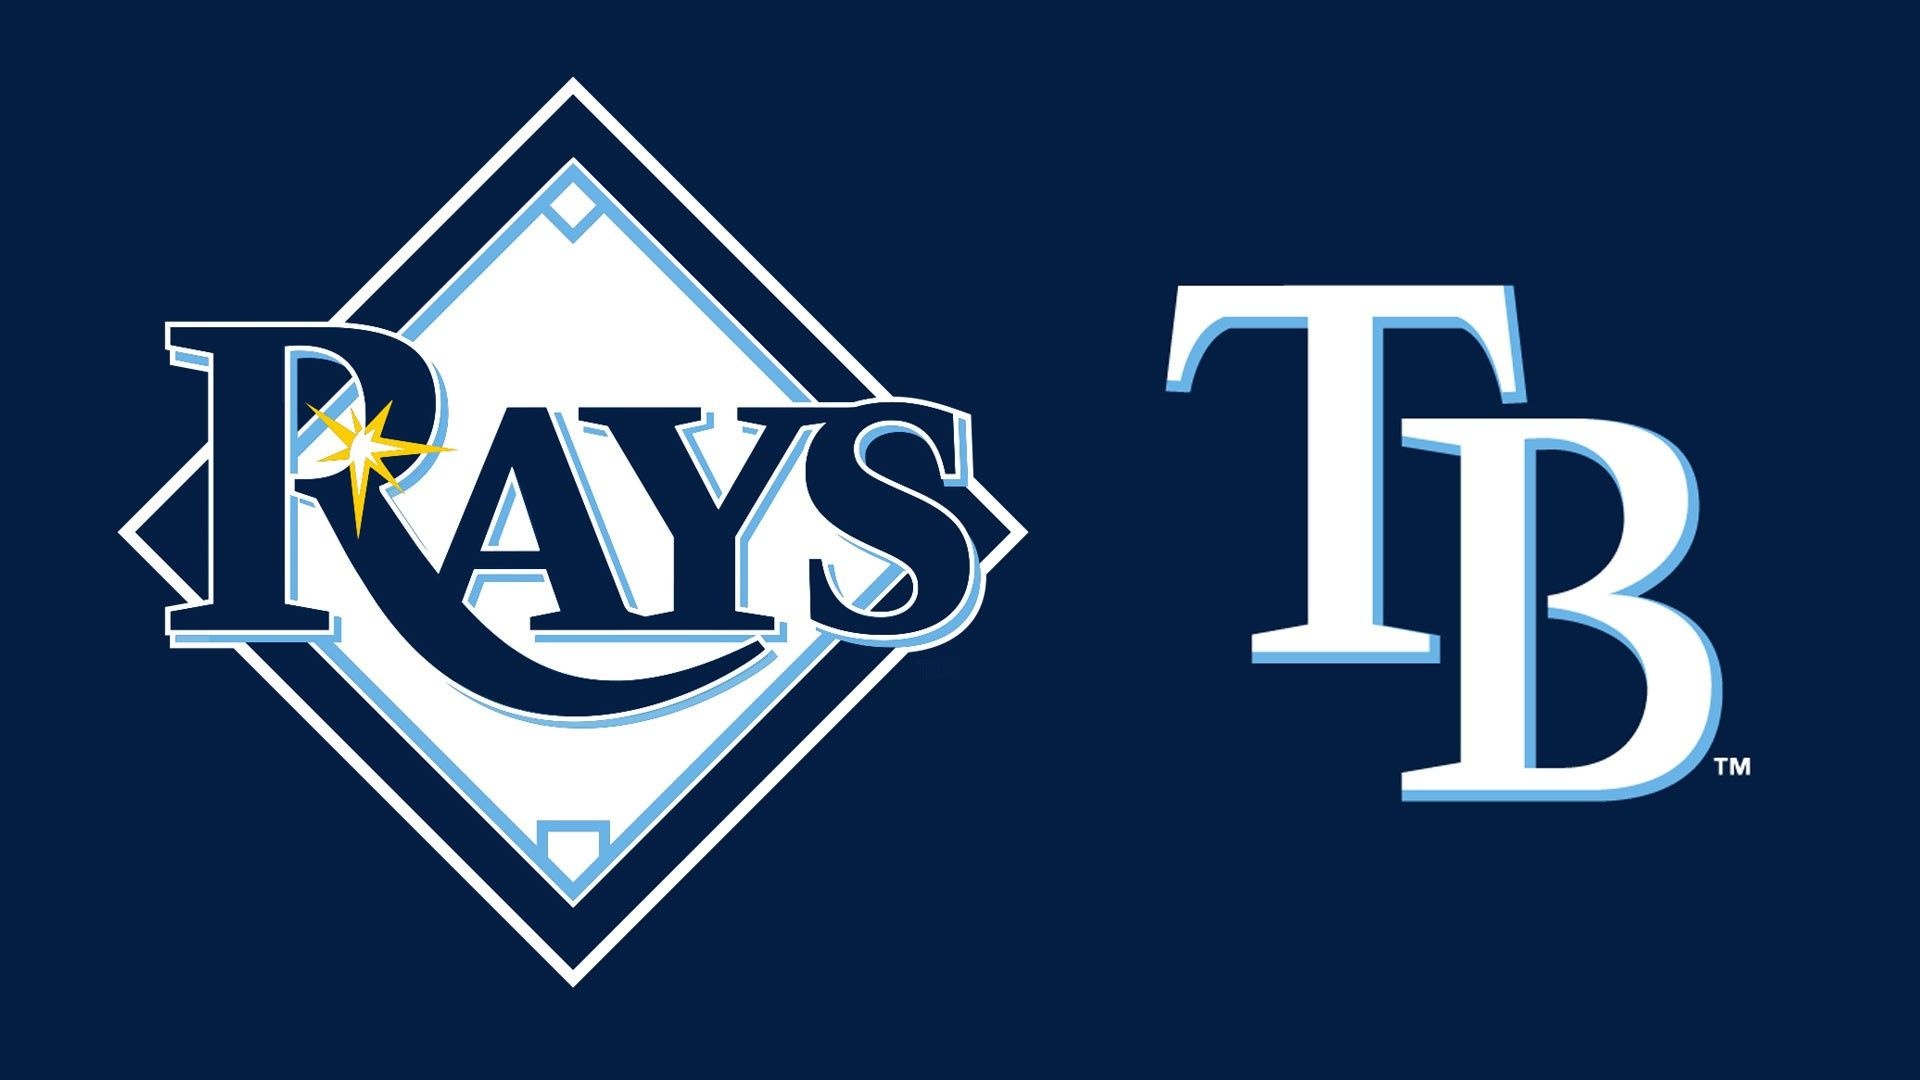 Tampa Bay Rays, Team logo, Full HD wallpaper, Jason Streets, 1920x1080 Full HD Desktop